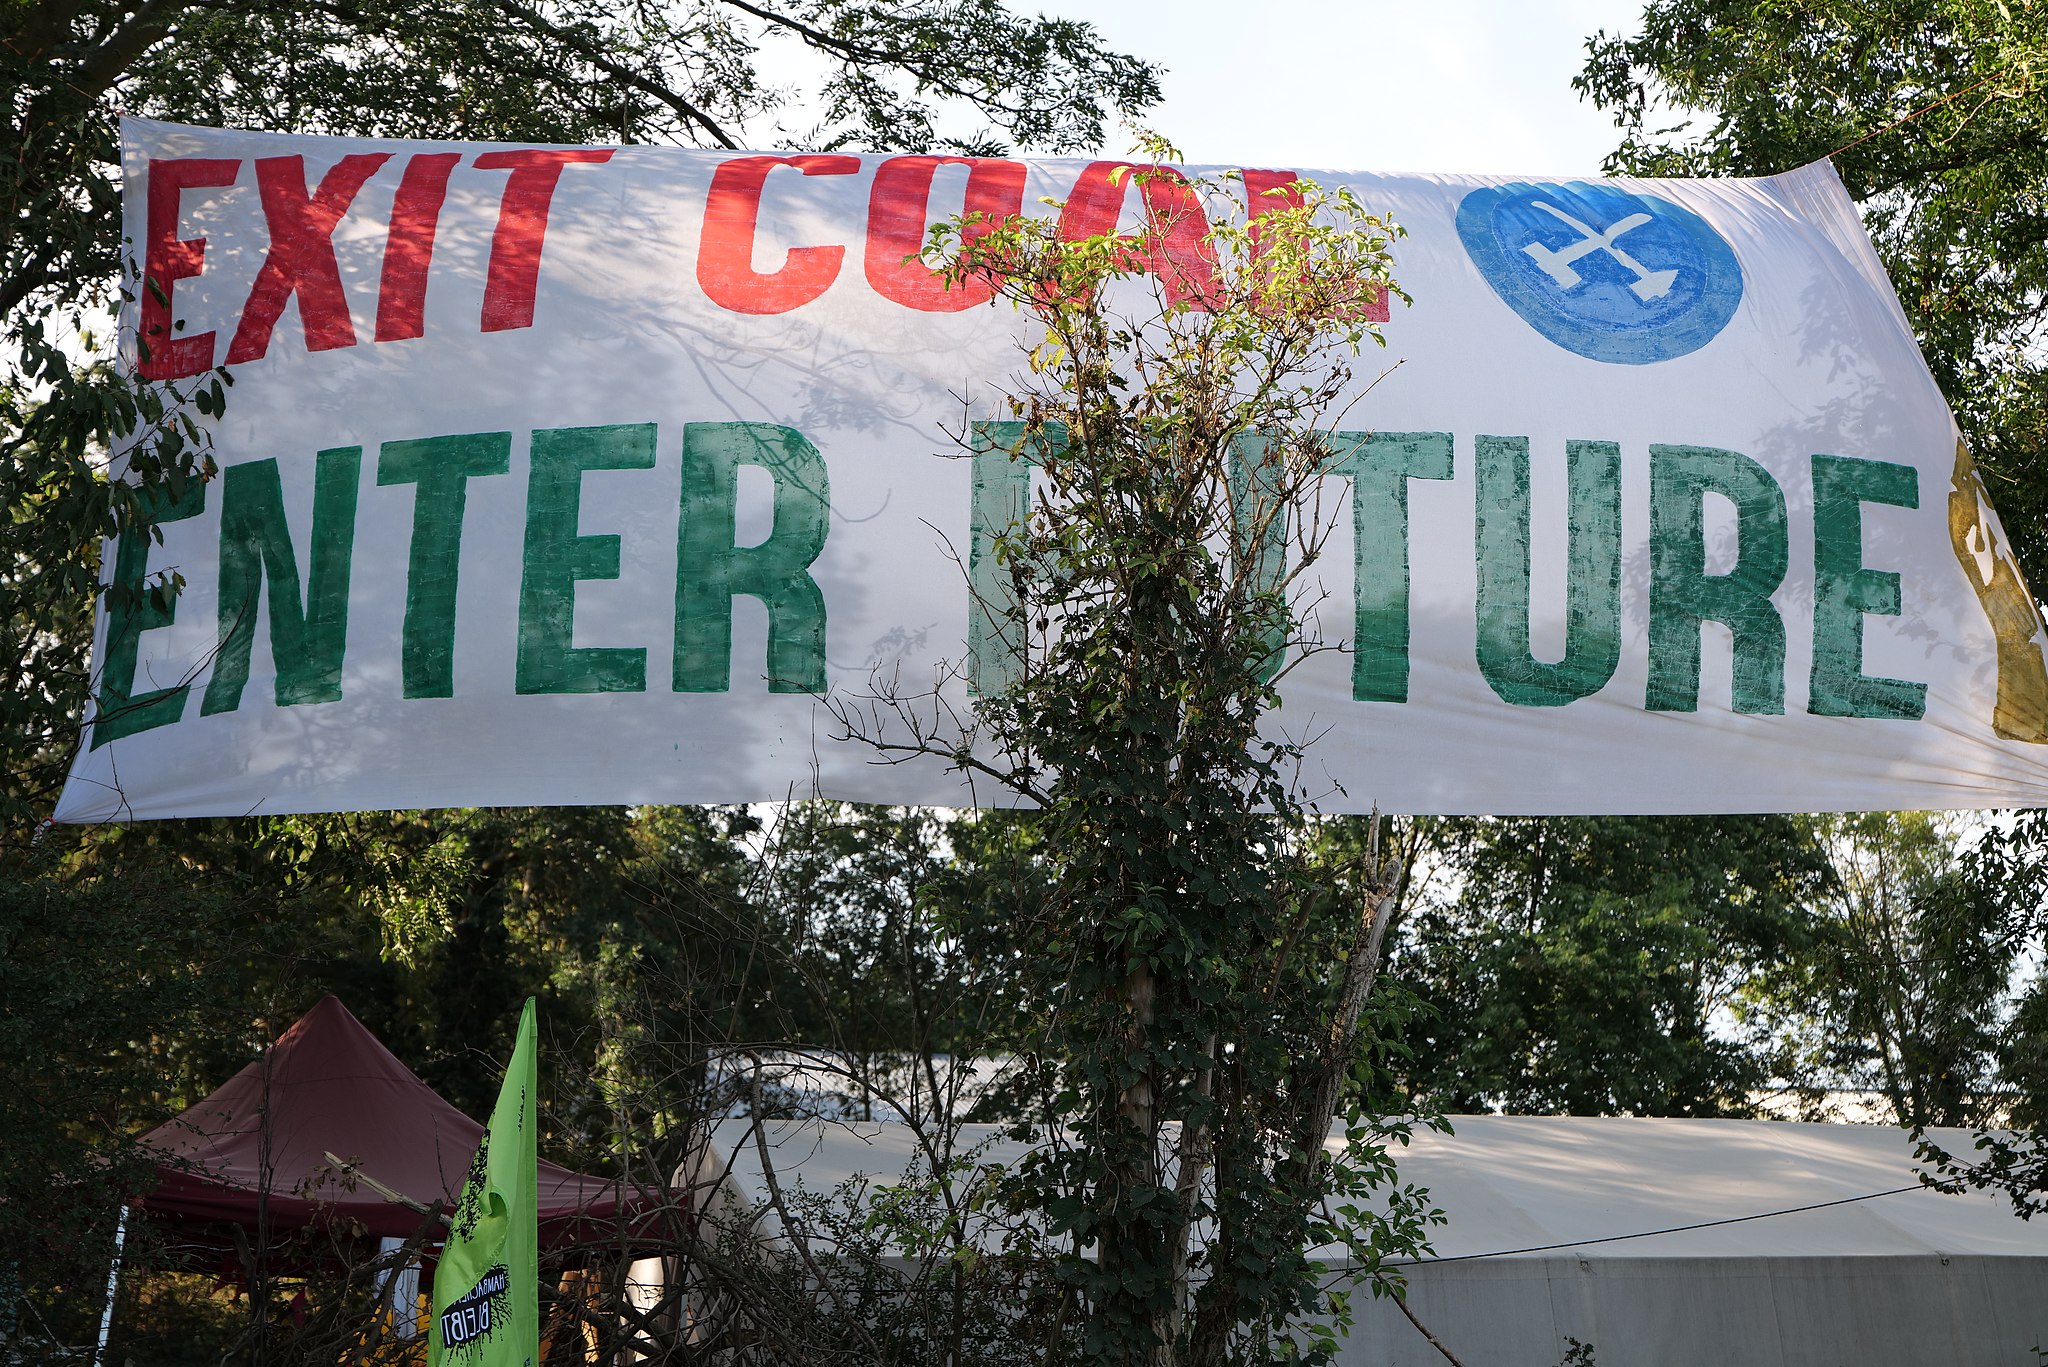 &quot;Exit Coal - Enter Future&quot; steht auf einem Banner in Lützerath